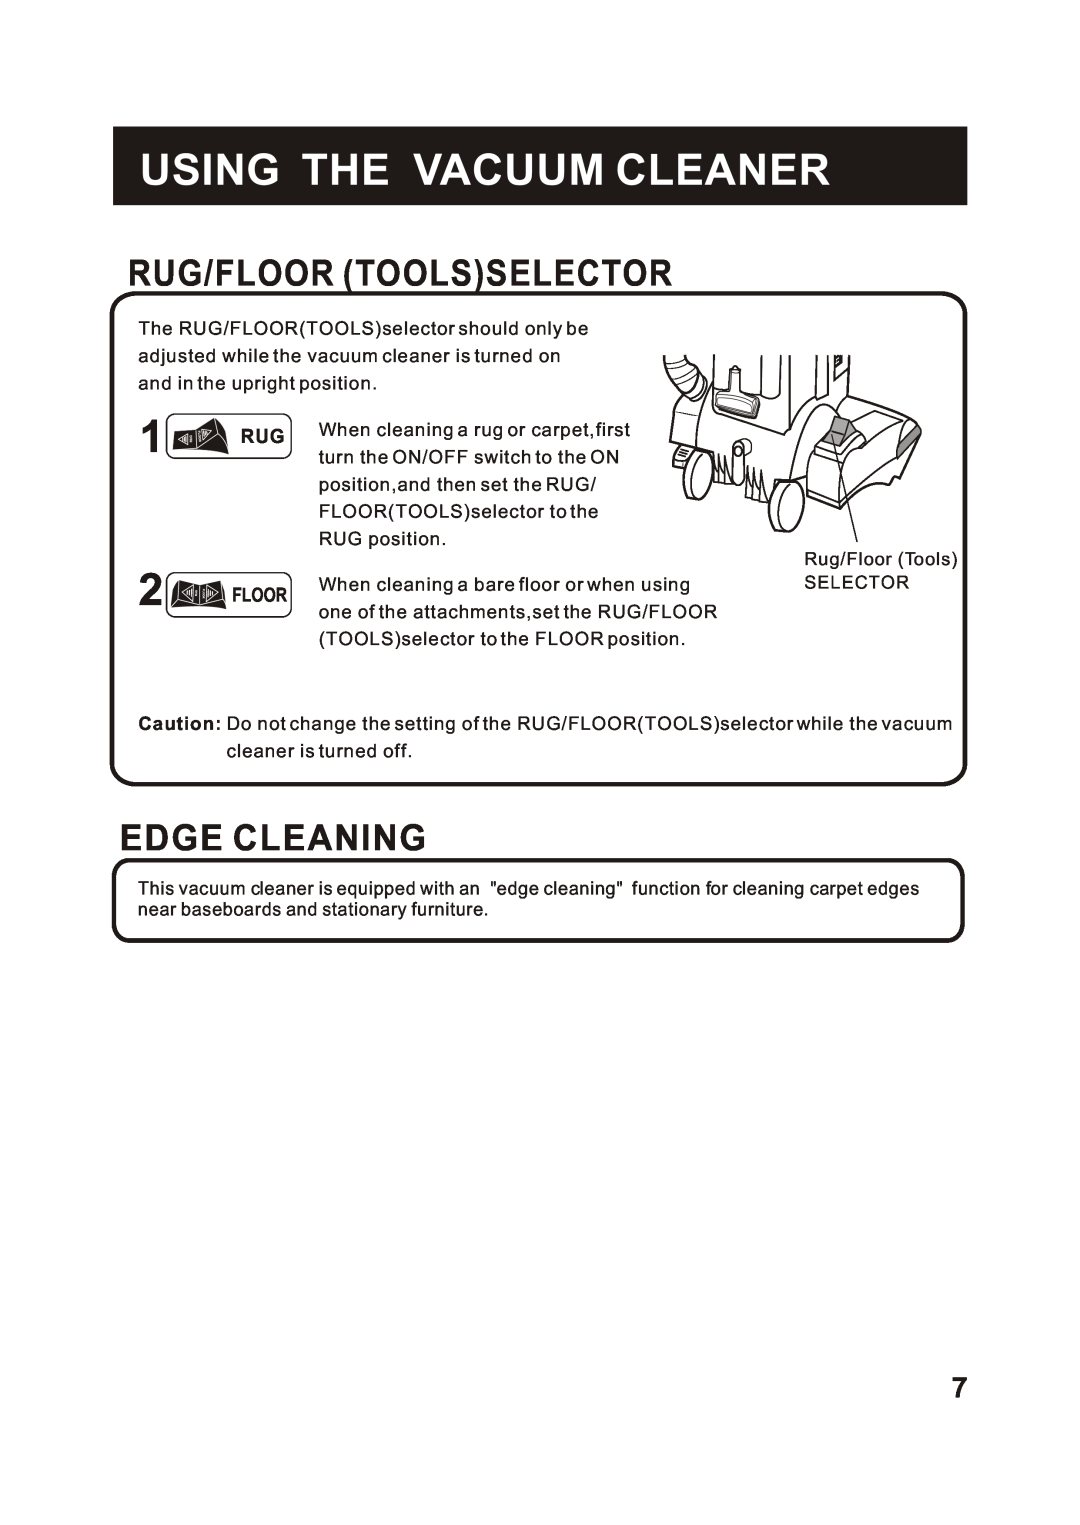 Fantom Vacuum FM742H instruction manual Rug/Floor Toolsselector, Edge Cleaning, Using The Vacuum Cleaner 